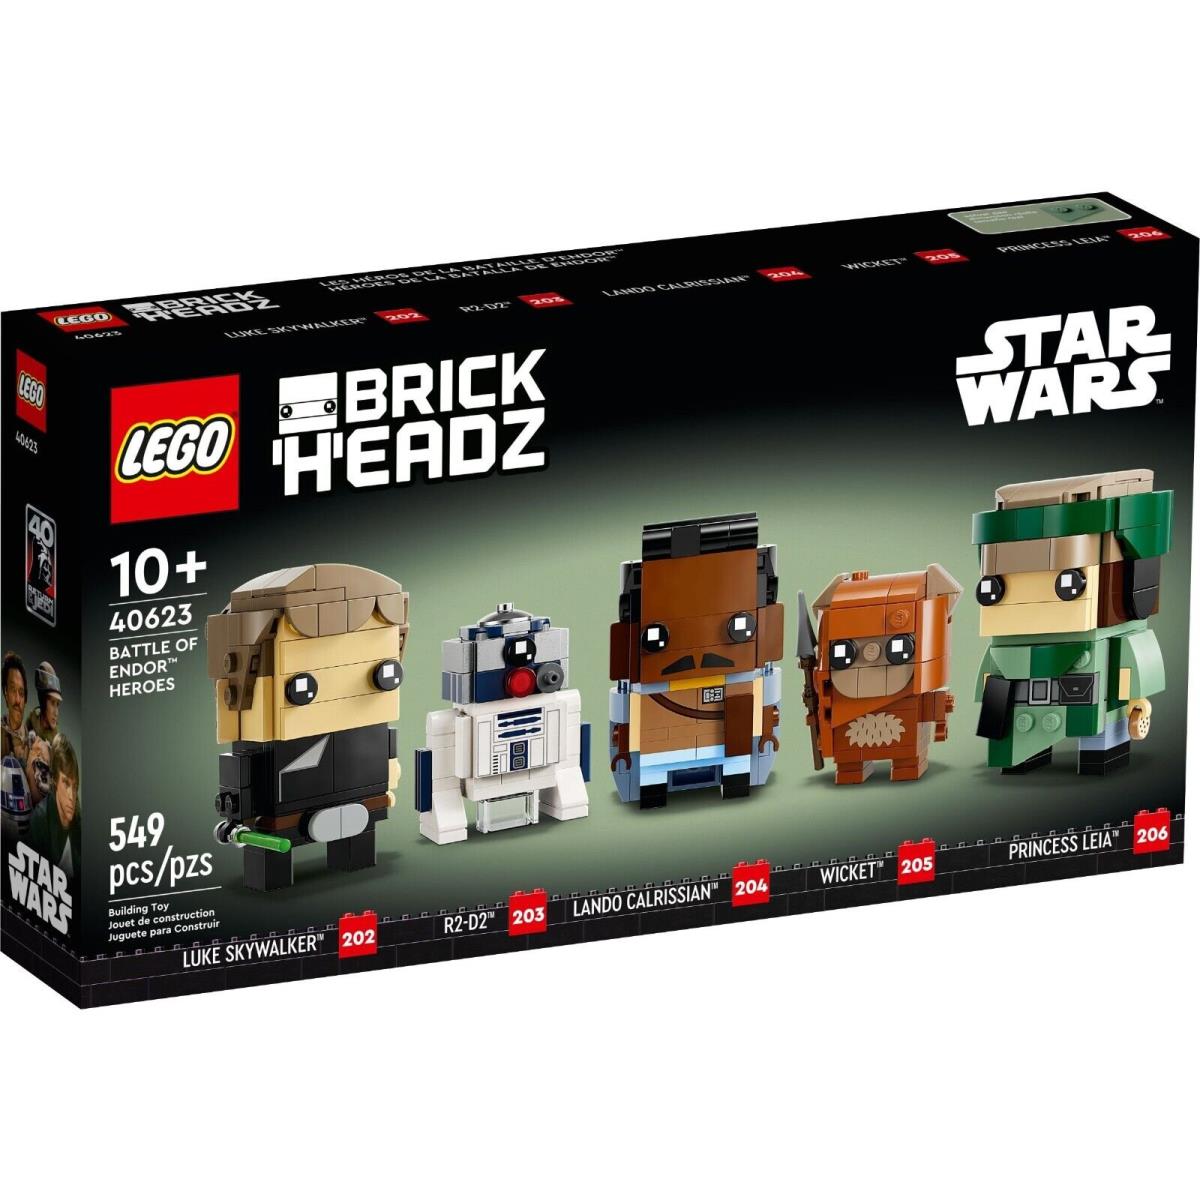 Lego 40623 Star Wars Brickheadz Battle OF Endor Heroes Box